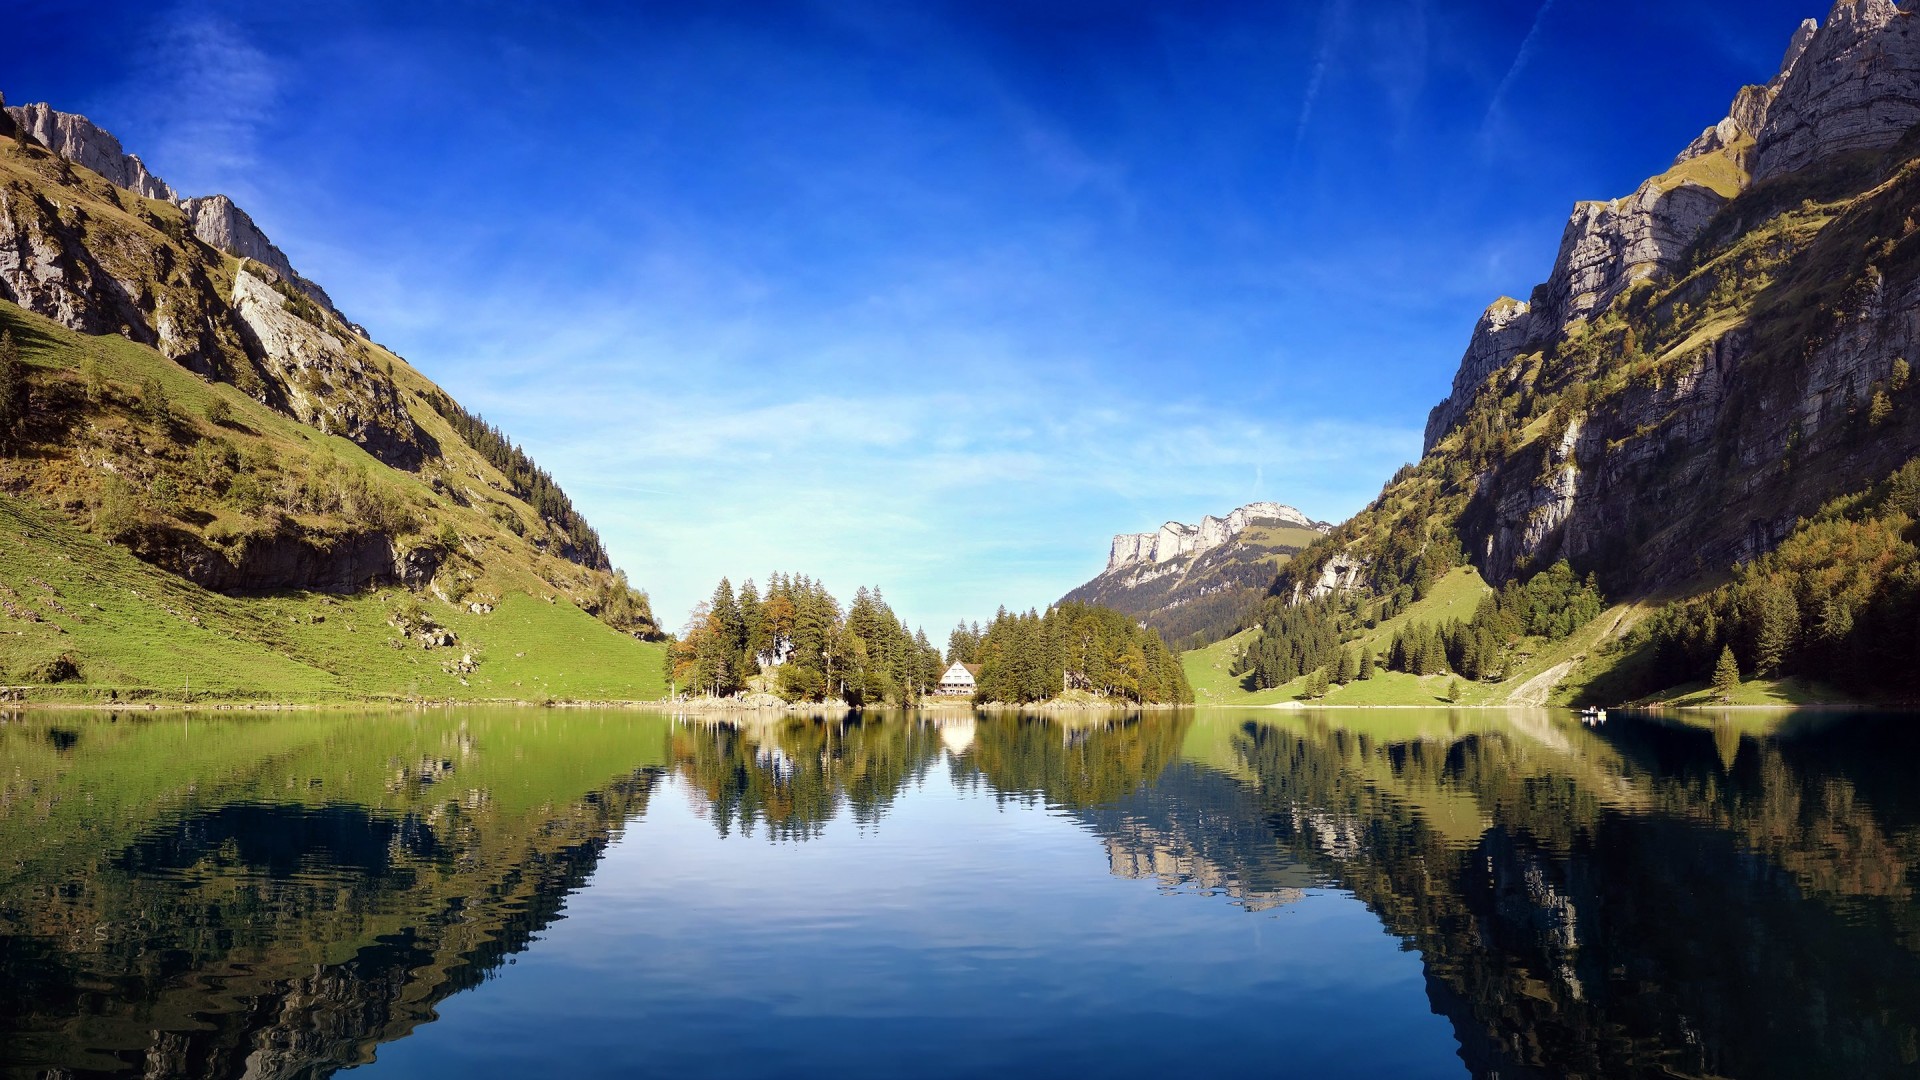 Seealpsee lake in Switzerland Wallpaper for Desktop 1920x1080